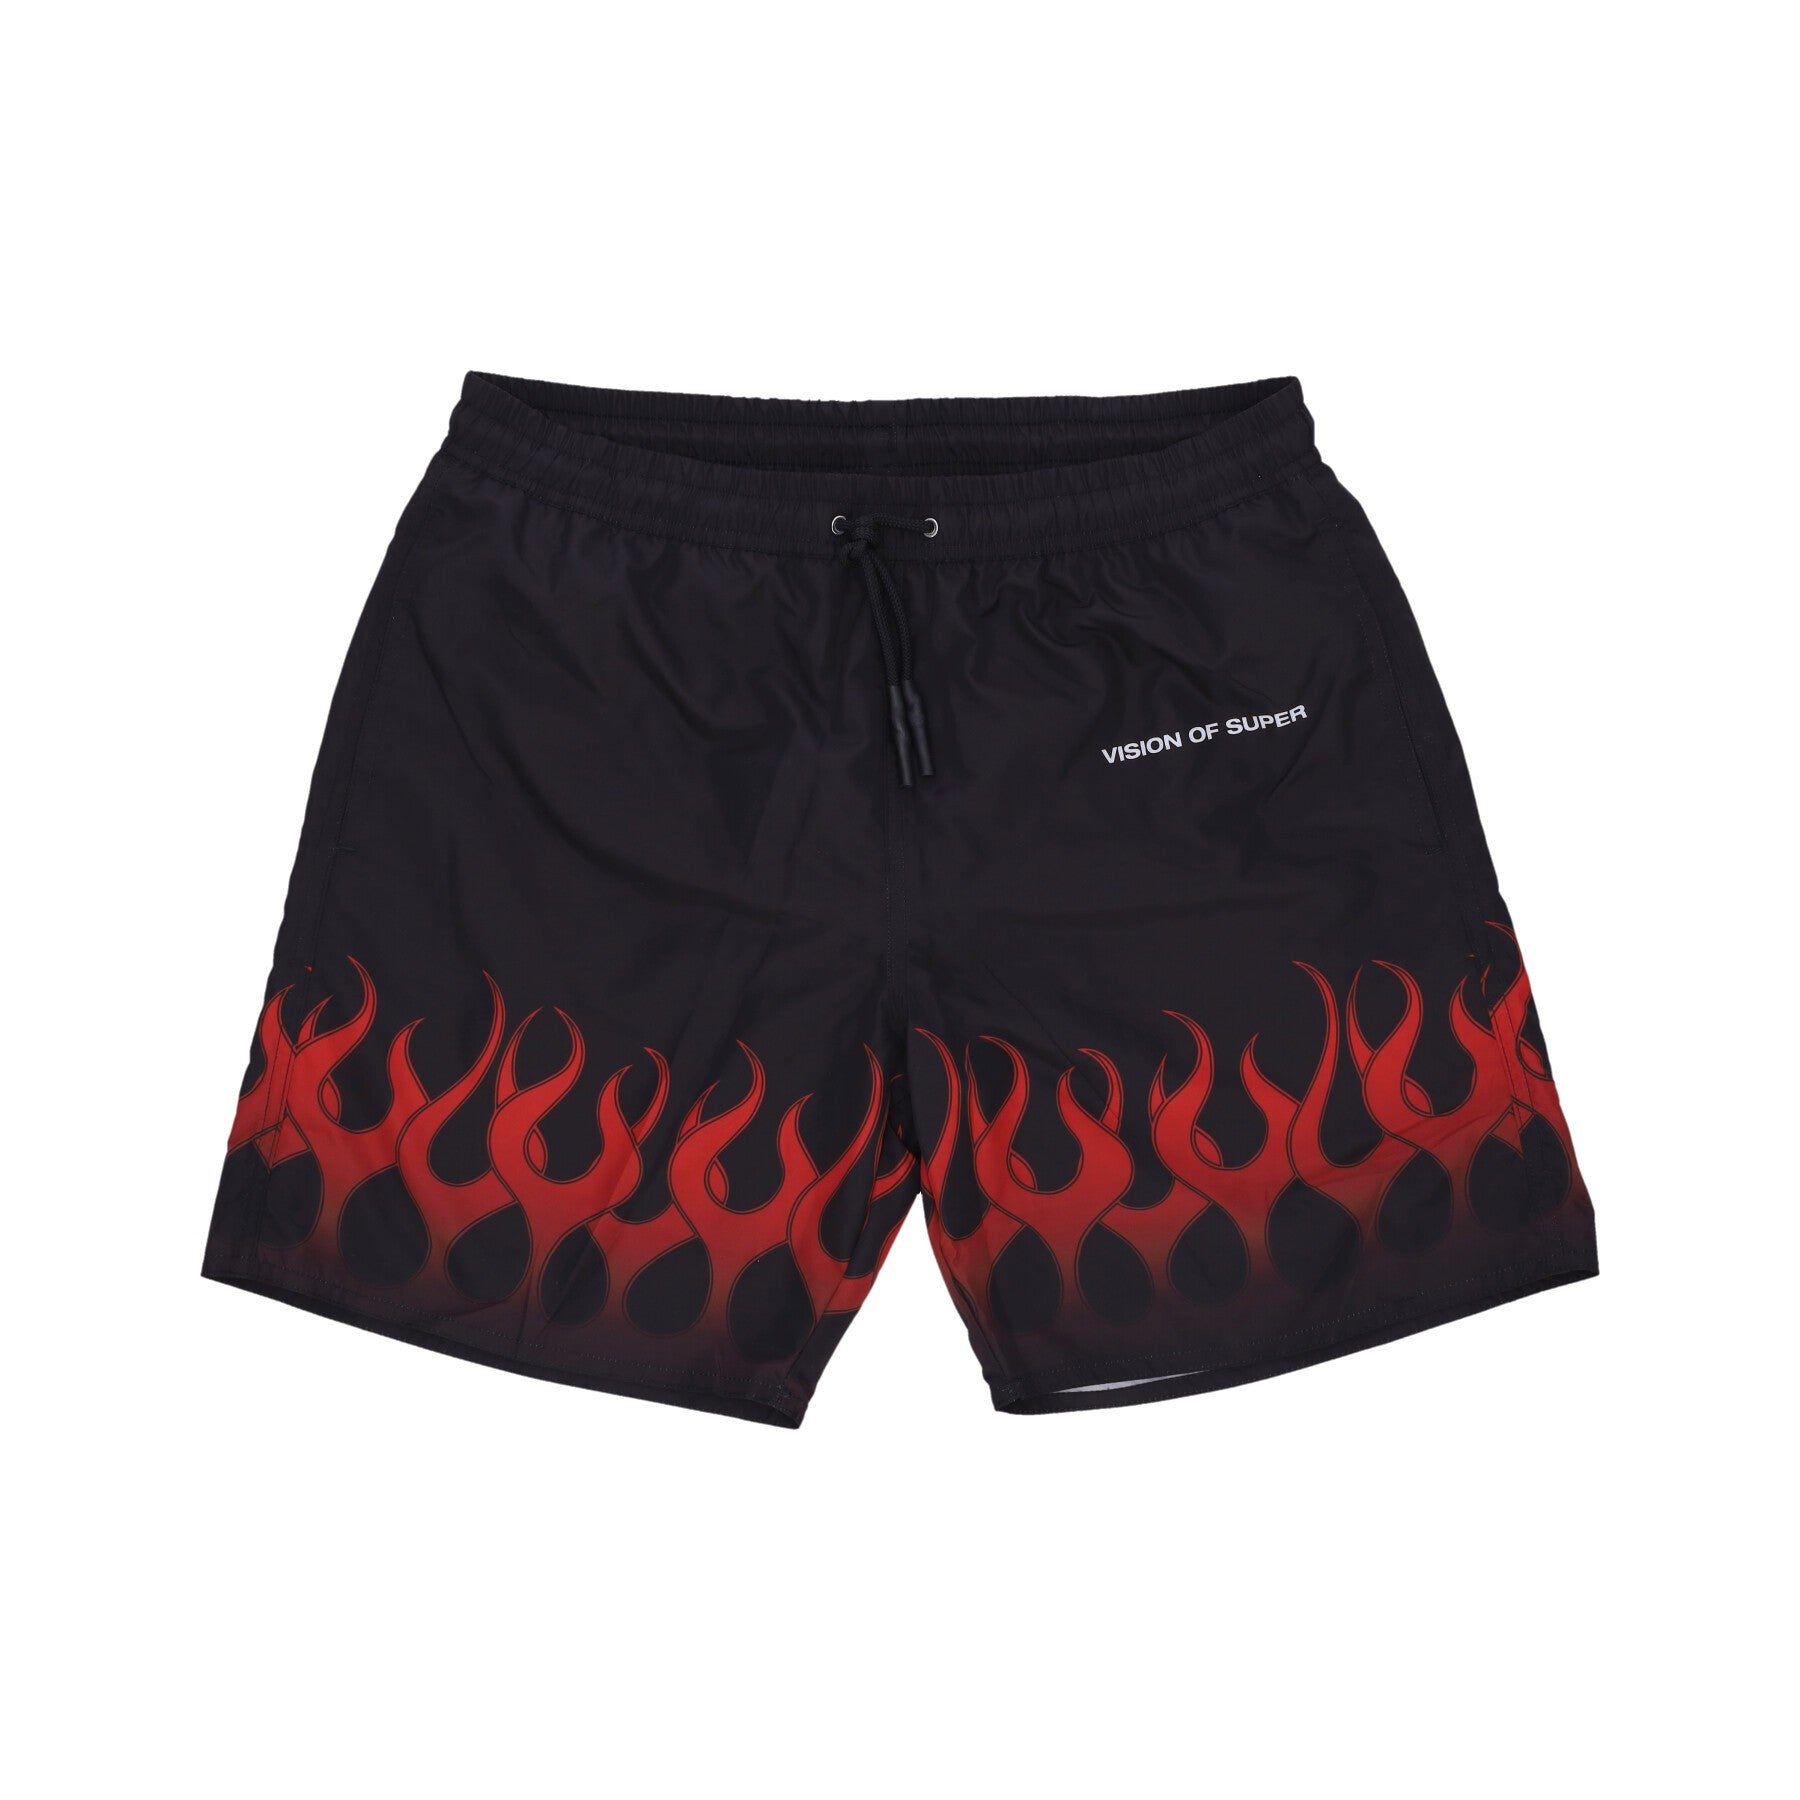 Vision Of Super, Costume Pantaloncino Uomo Flames Swimwear, Black/red